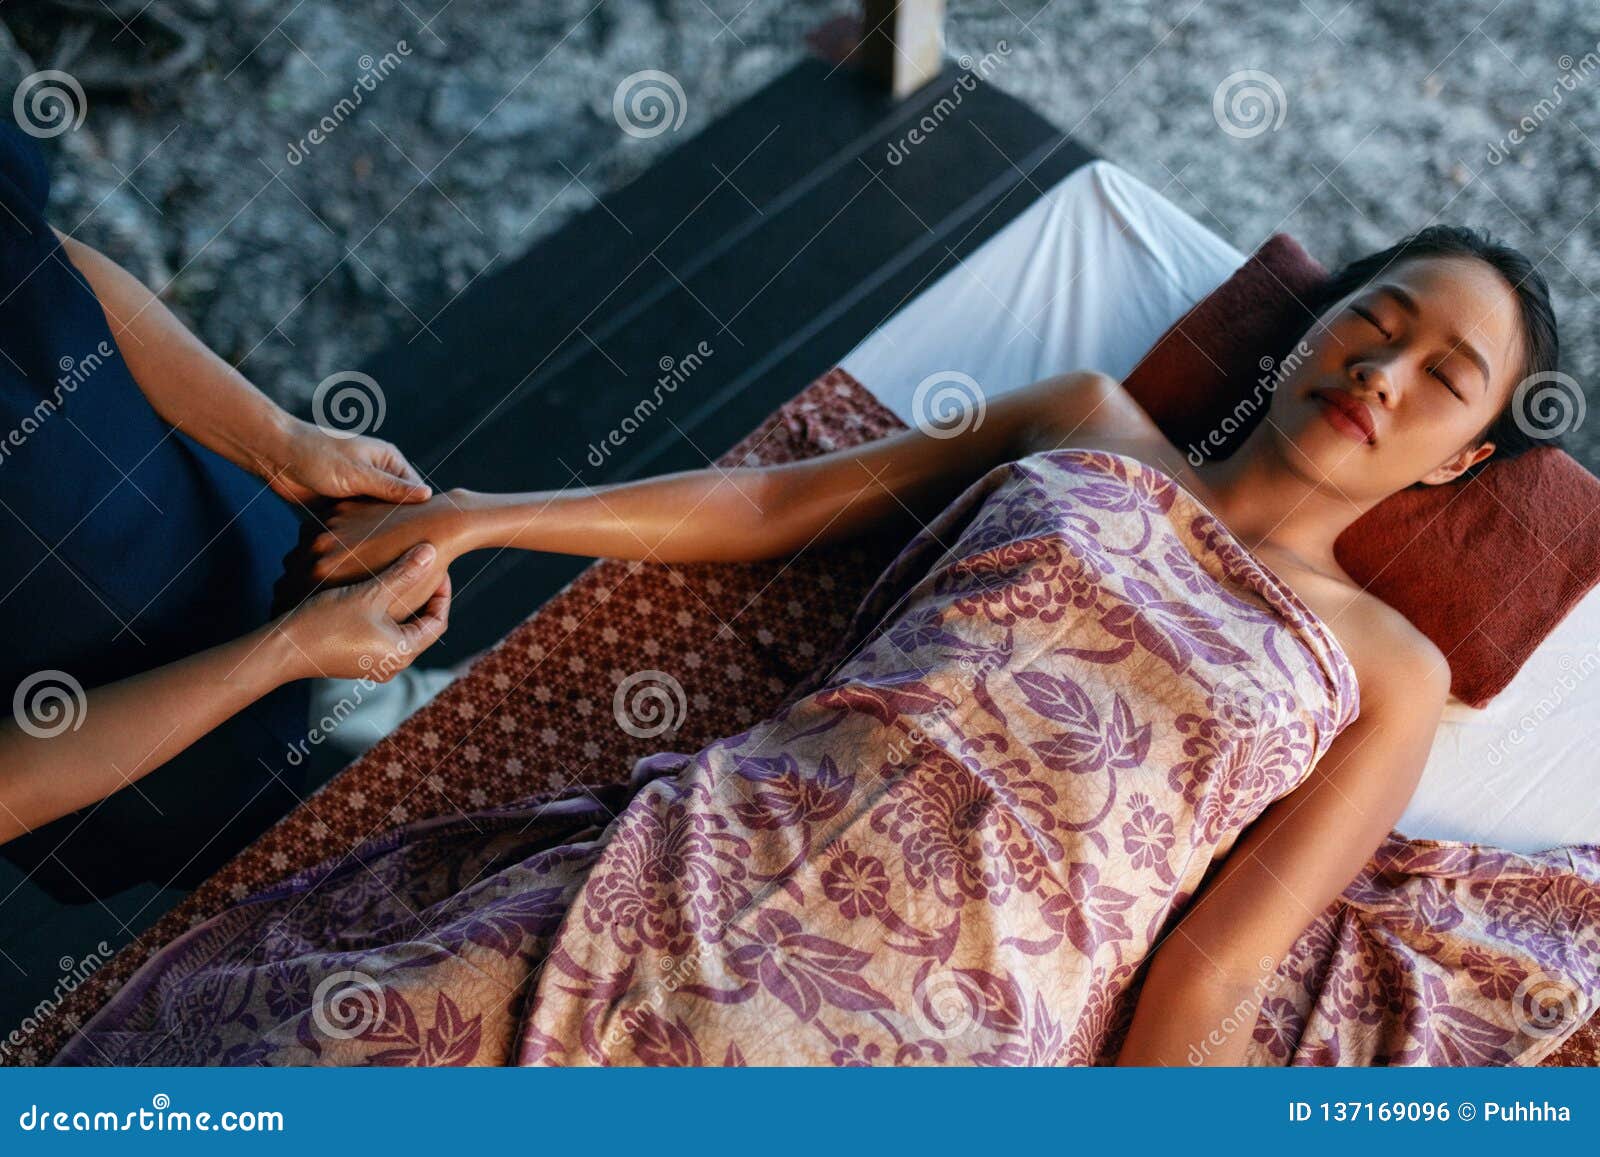 https://thumbs.dreamstime.com/z/thai-body-massage-beautiful-woman-getting-hand-spa-asian-relaxing-resort-high-resolution-137169096.jpg